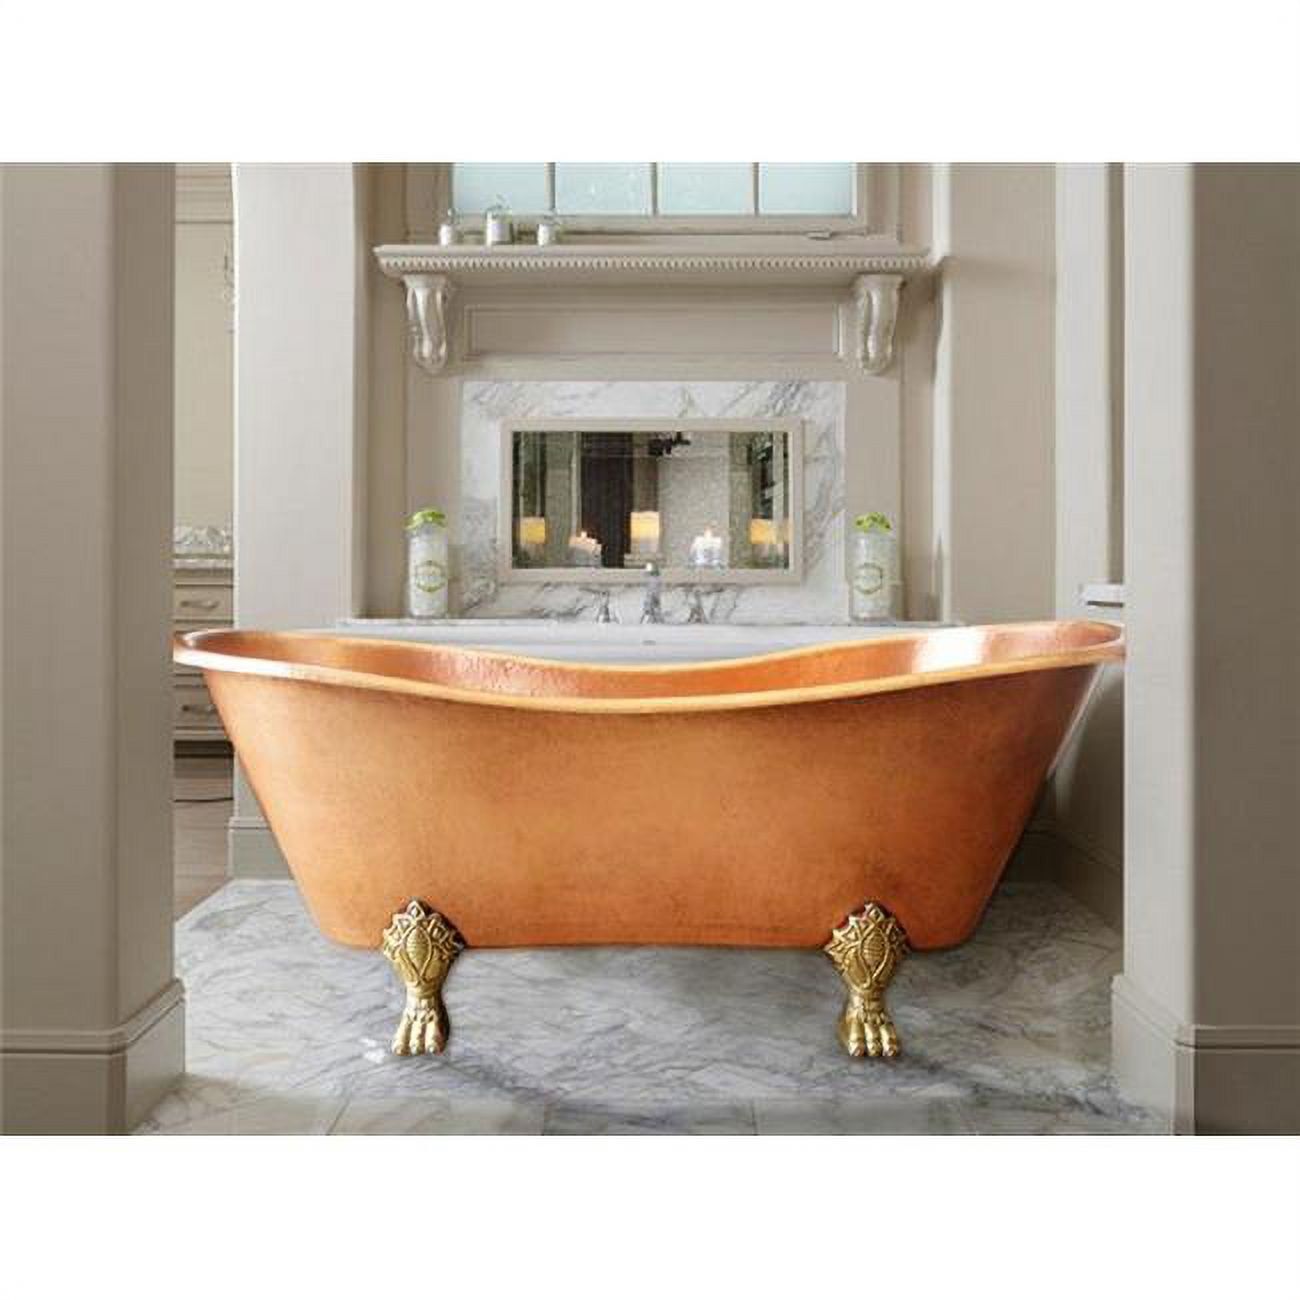 Cbt-at-58-db Copper Bath Tub Antique Design, Dark Brown - Small - 28 X 28 X 58 In.